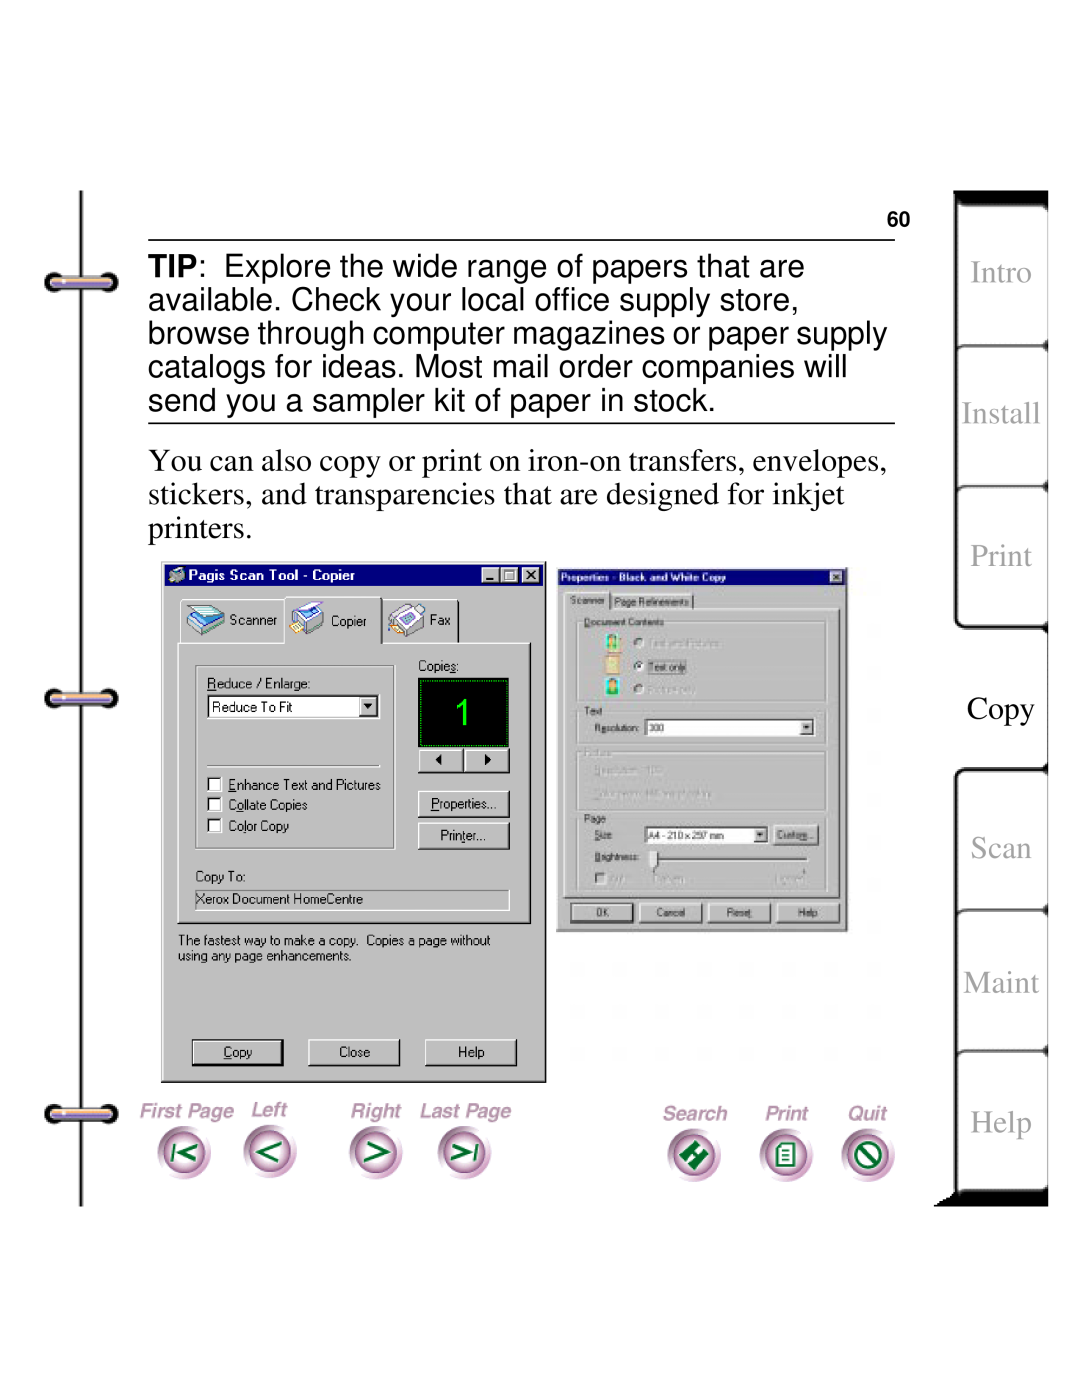 Xerox Document HomeCentre manual Intro Install Print, Copy, Scan Maint, Help 